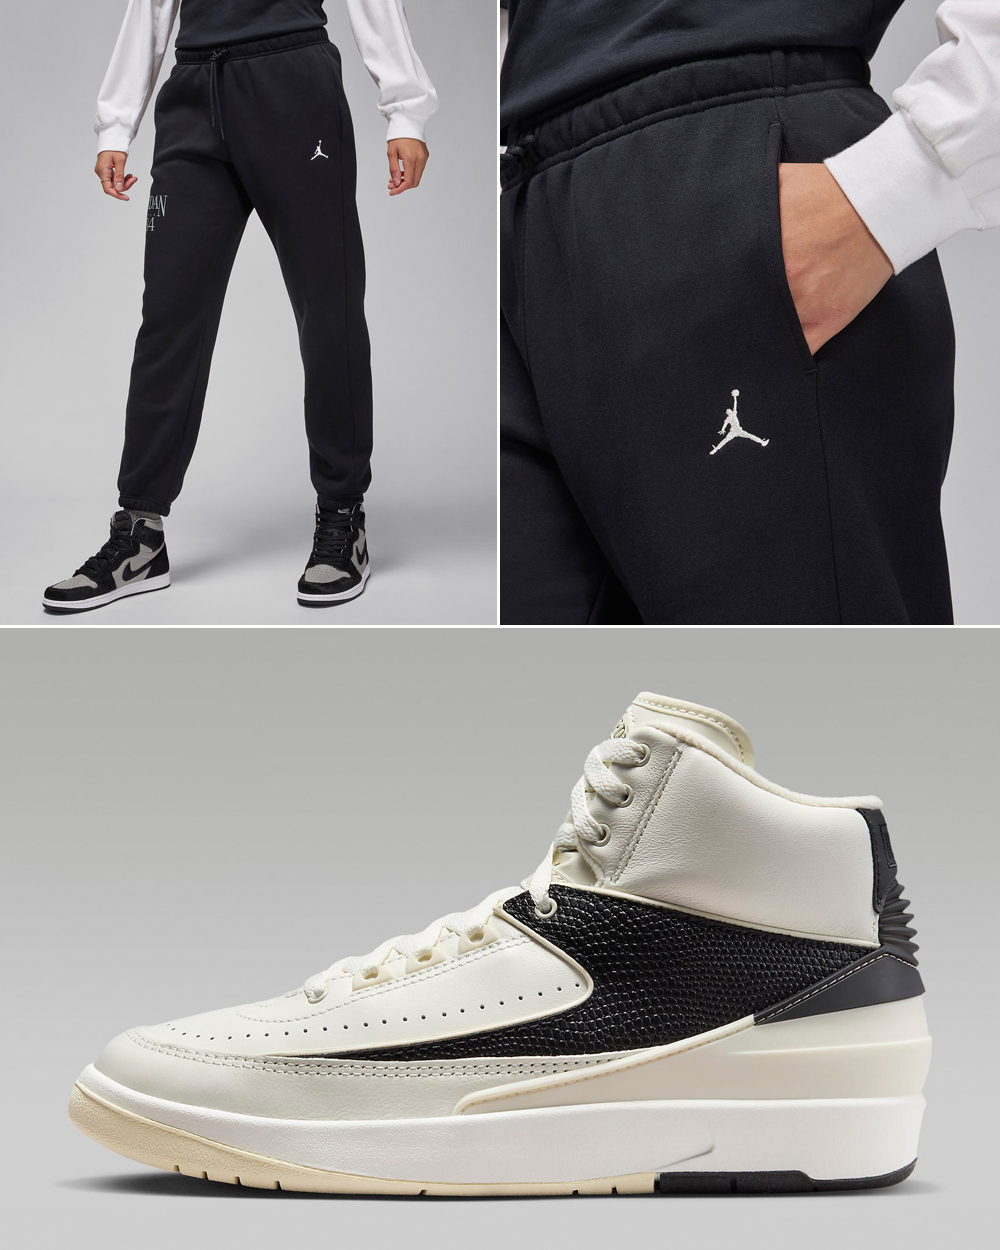 Air-Jordan-2-Womens-Sail-Black-Matching-Pants-Outfit